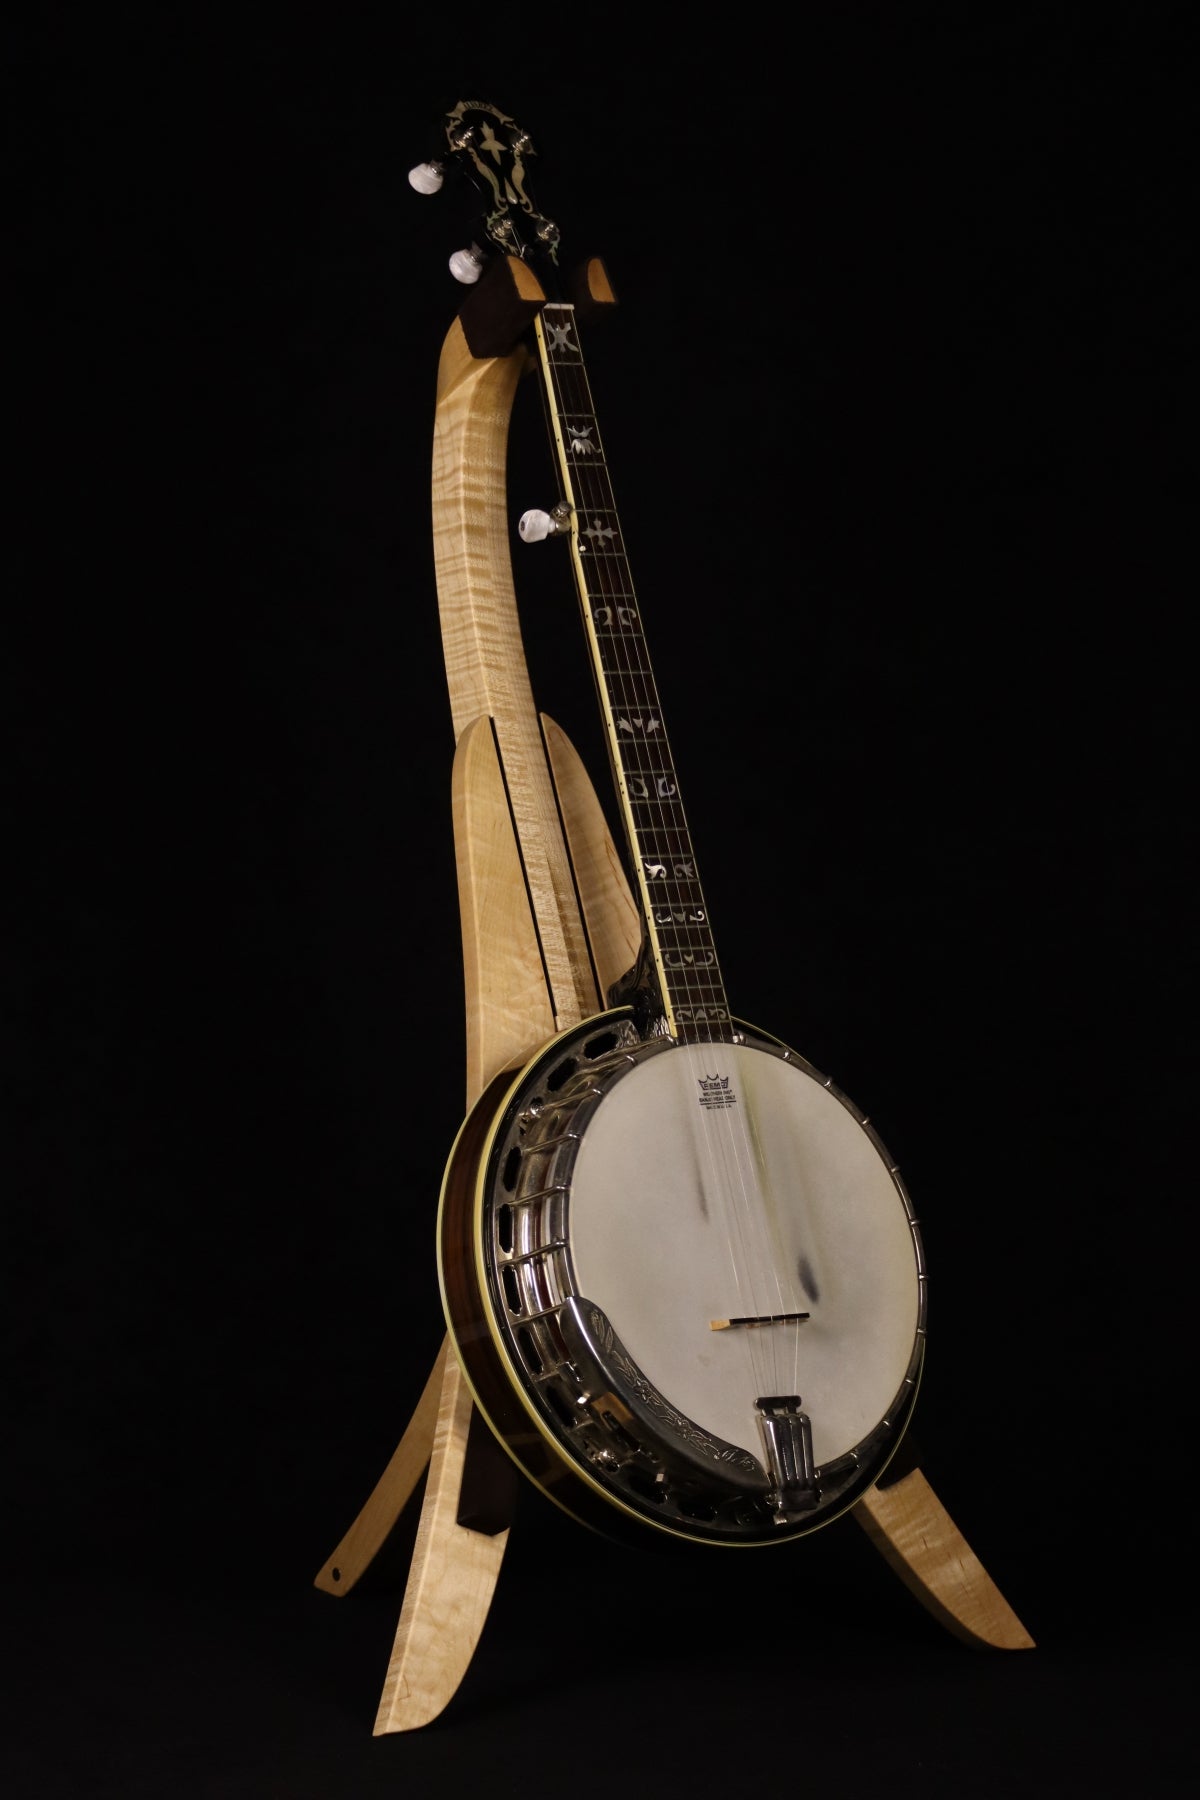 Folding curly maple wood banjo floor stand full front image with Alvarez banjo